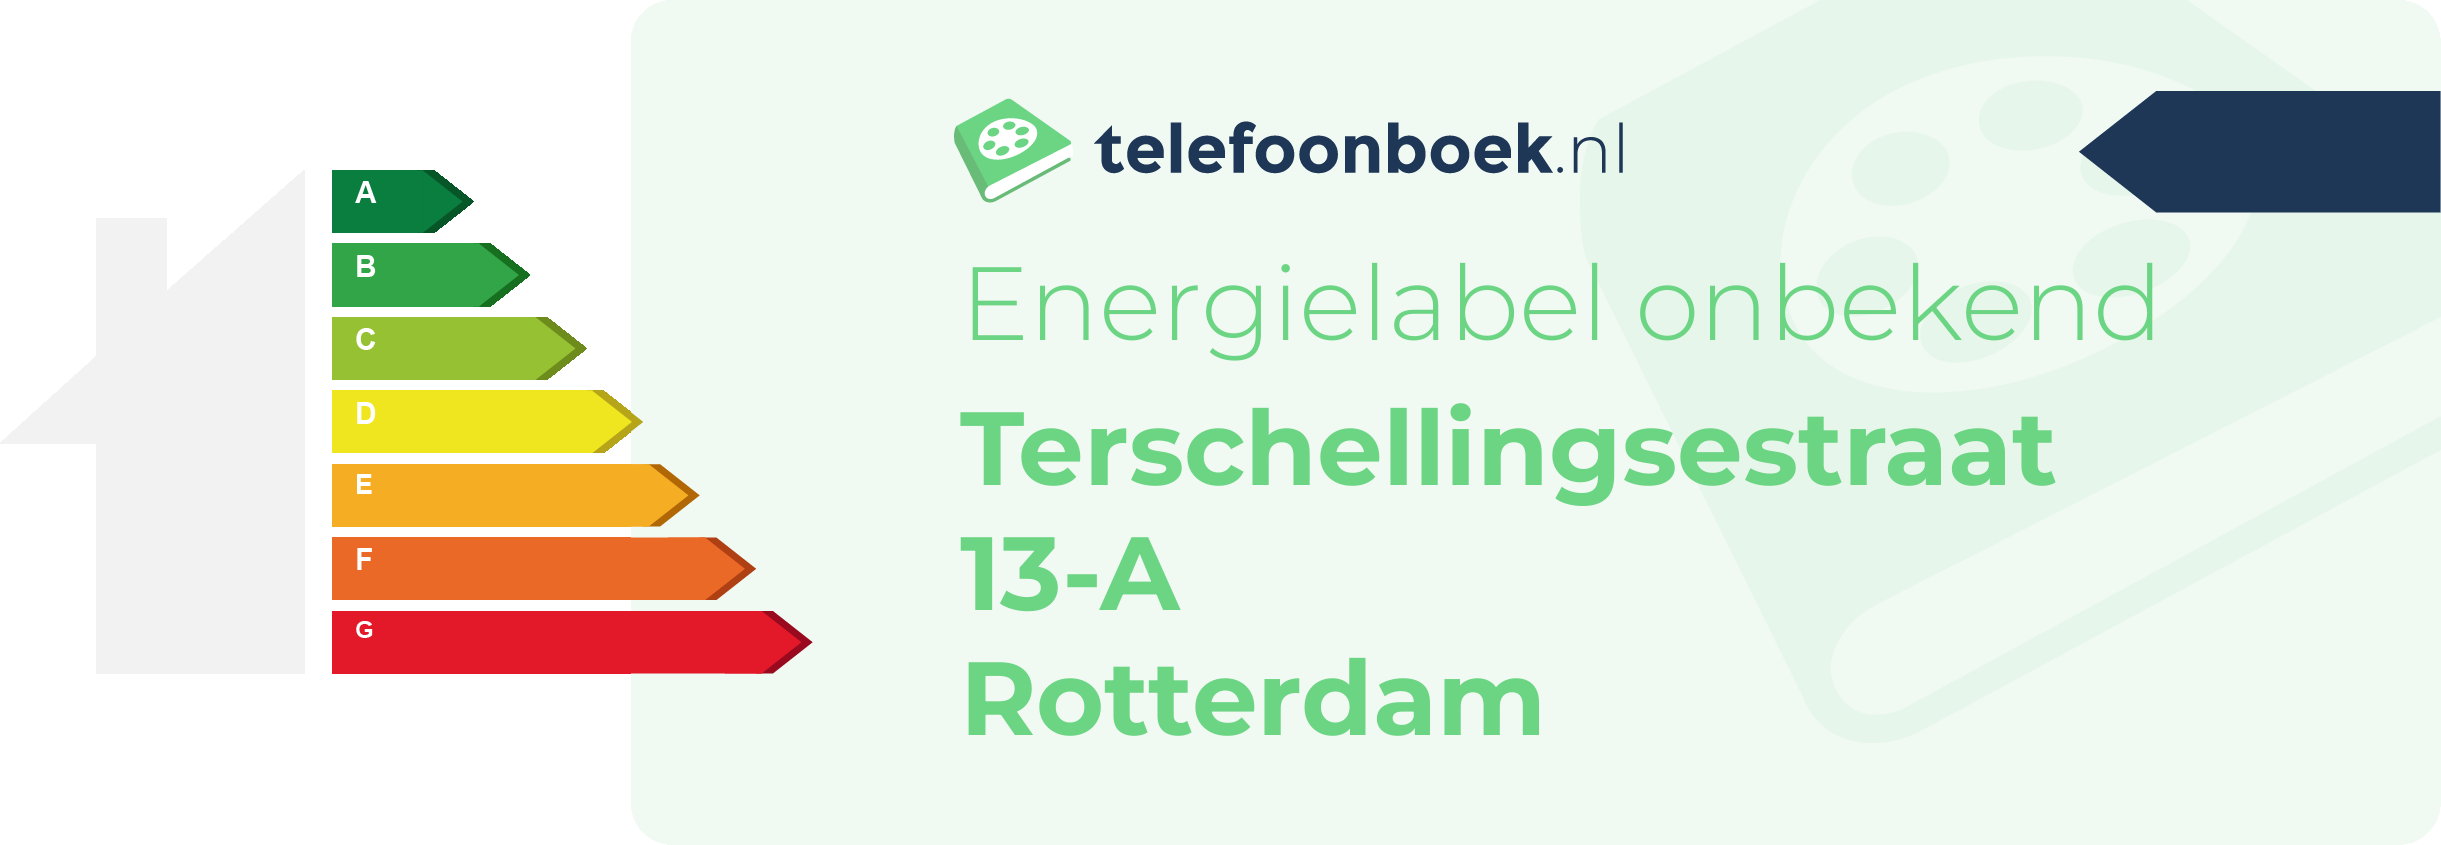 Energielabel Terschellingsestraat 13-A Rotterdam